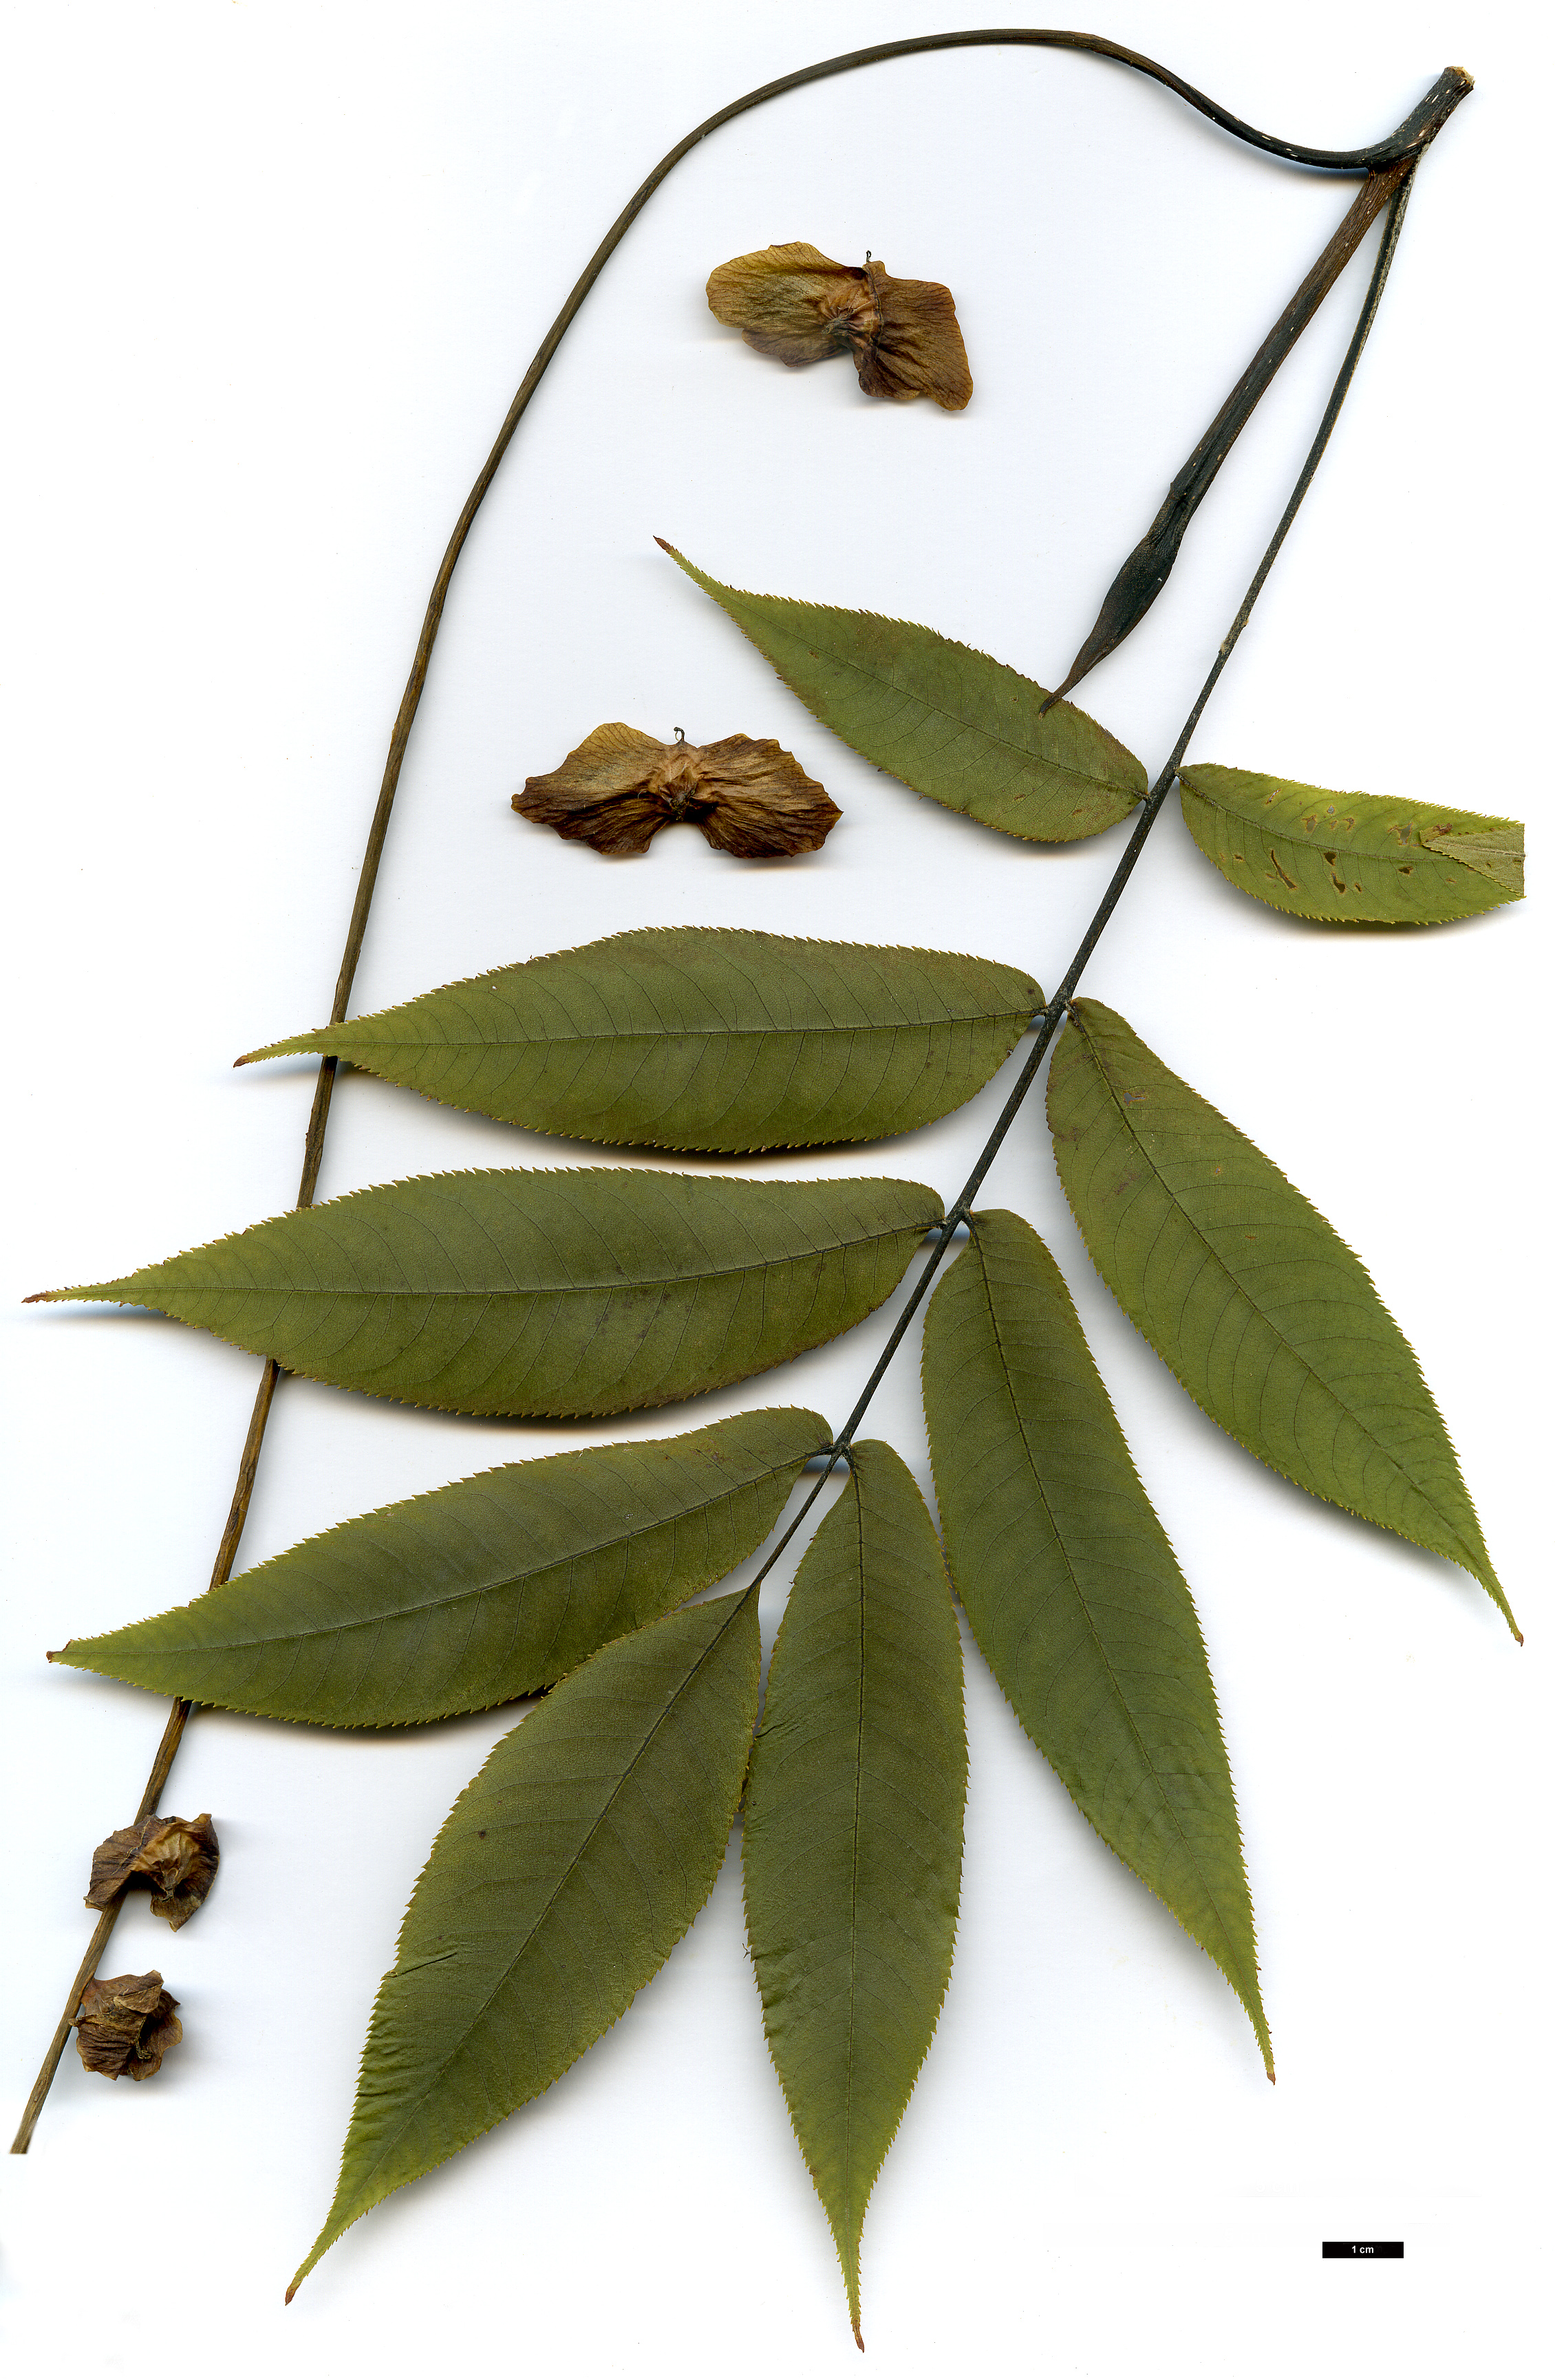 High resolution image: Family: Juglandaceae - Genus: Pterocarya - Taxon: macroptera - SpeciesSub: var. insignis